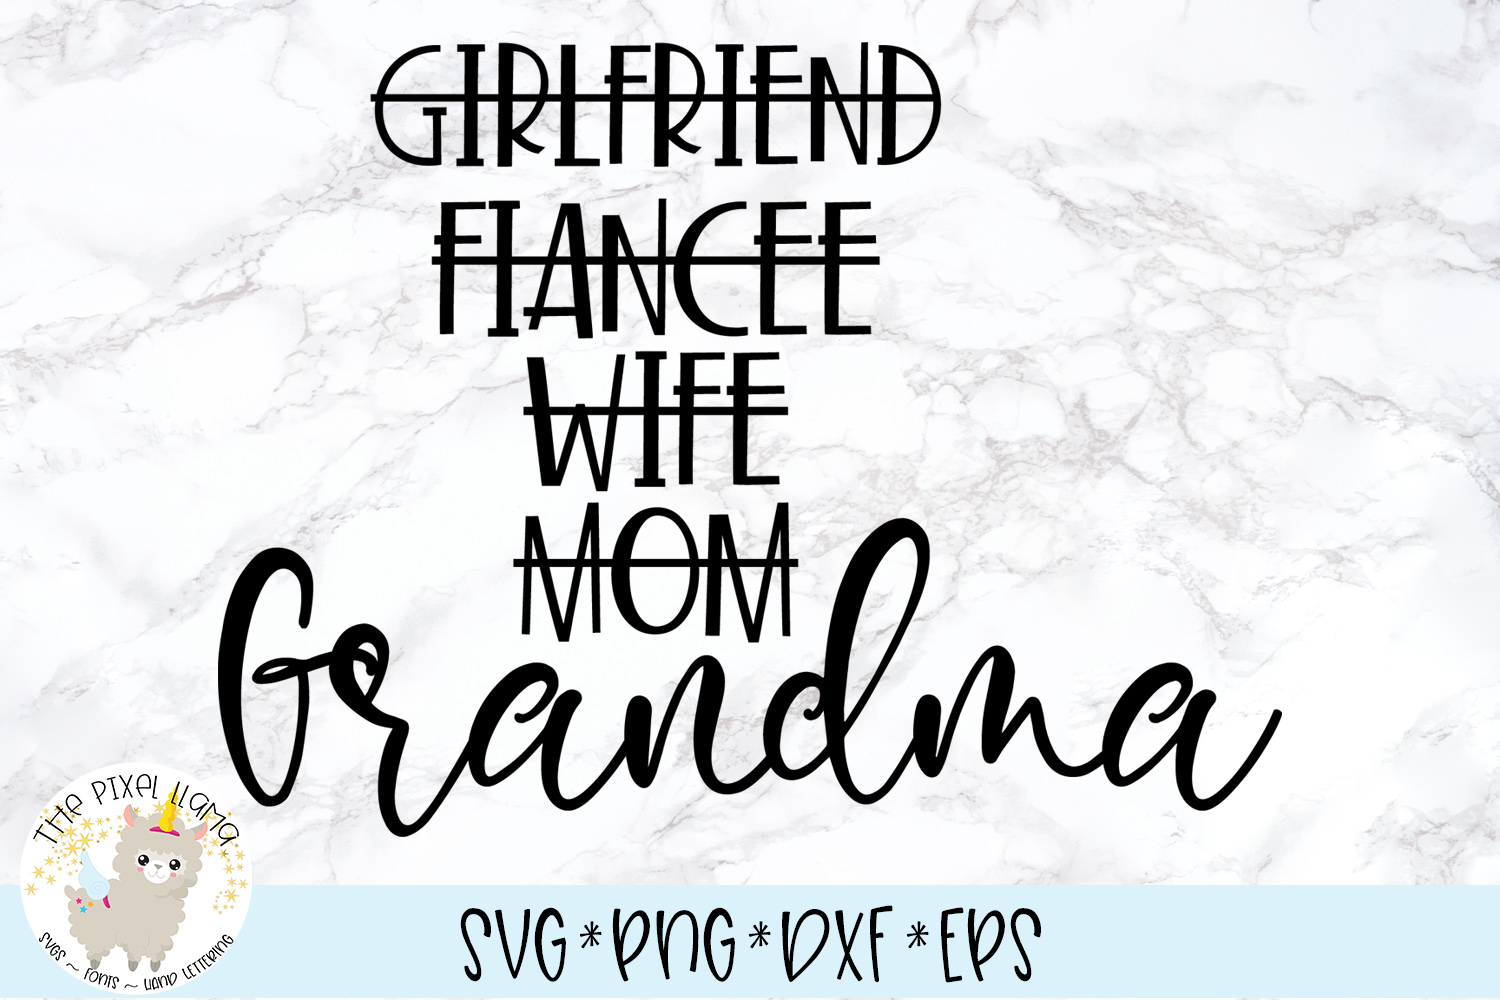 Download Girlfriend Fiancee Wife Mom Grandma SVG Cut File